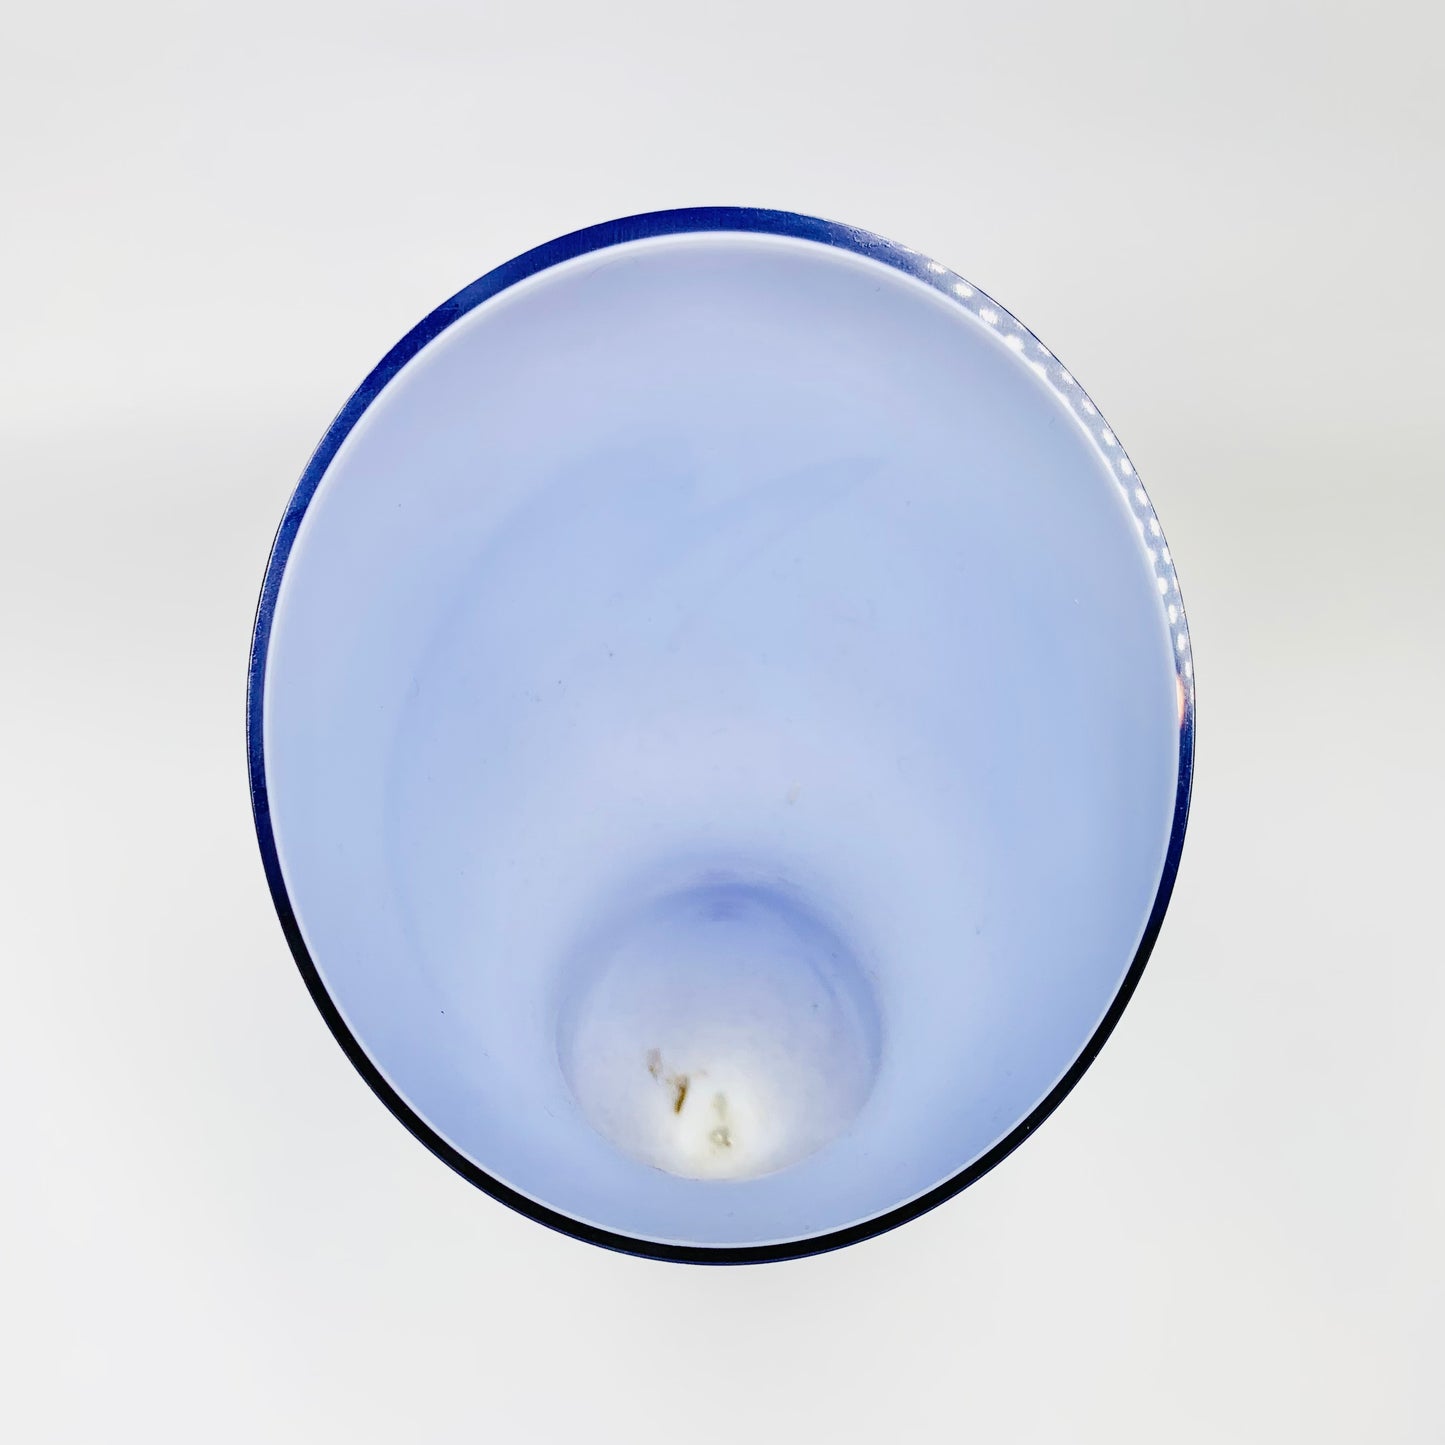 Space Age Swedish cased blue glass vase